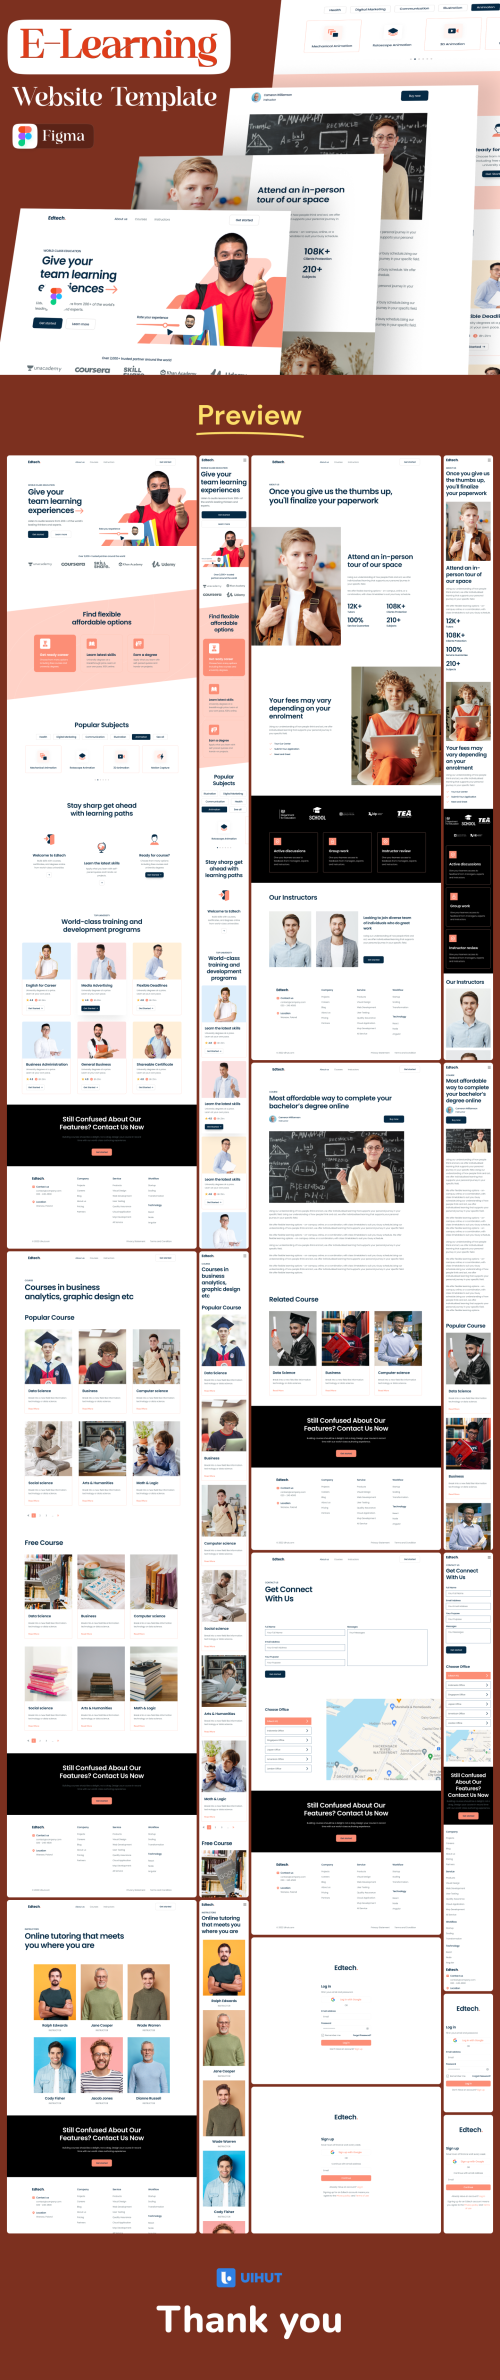 UIHut - Education Platform Website Theme - 25384